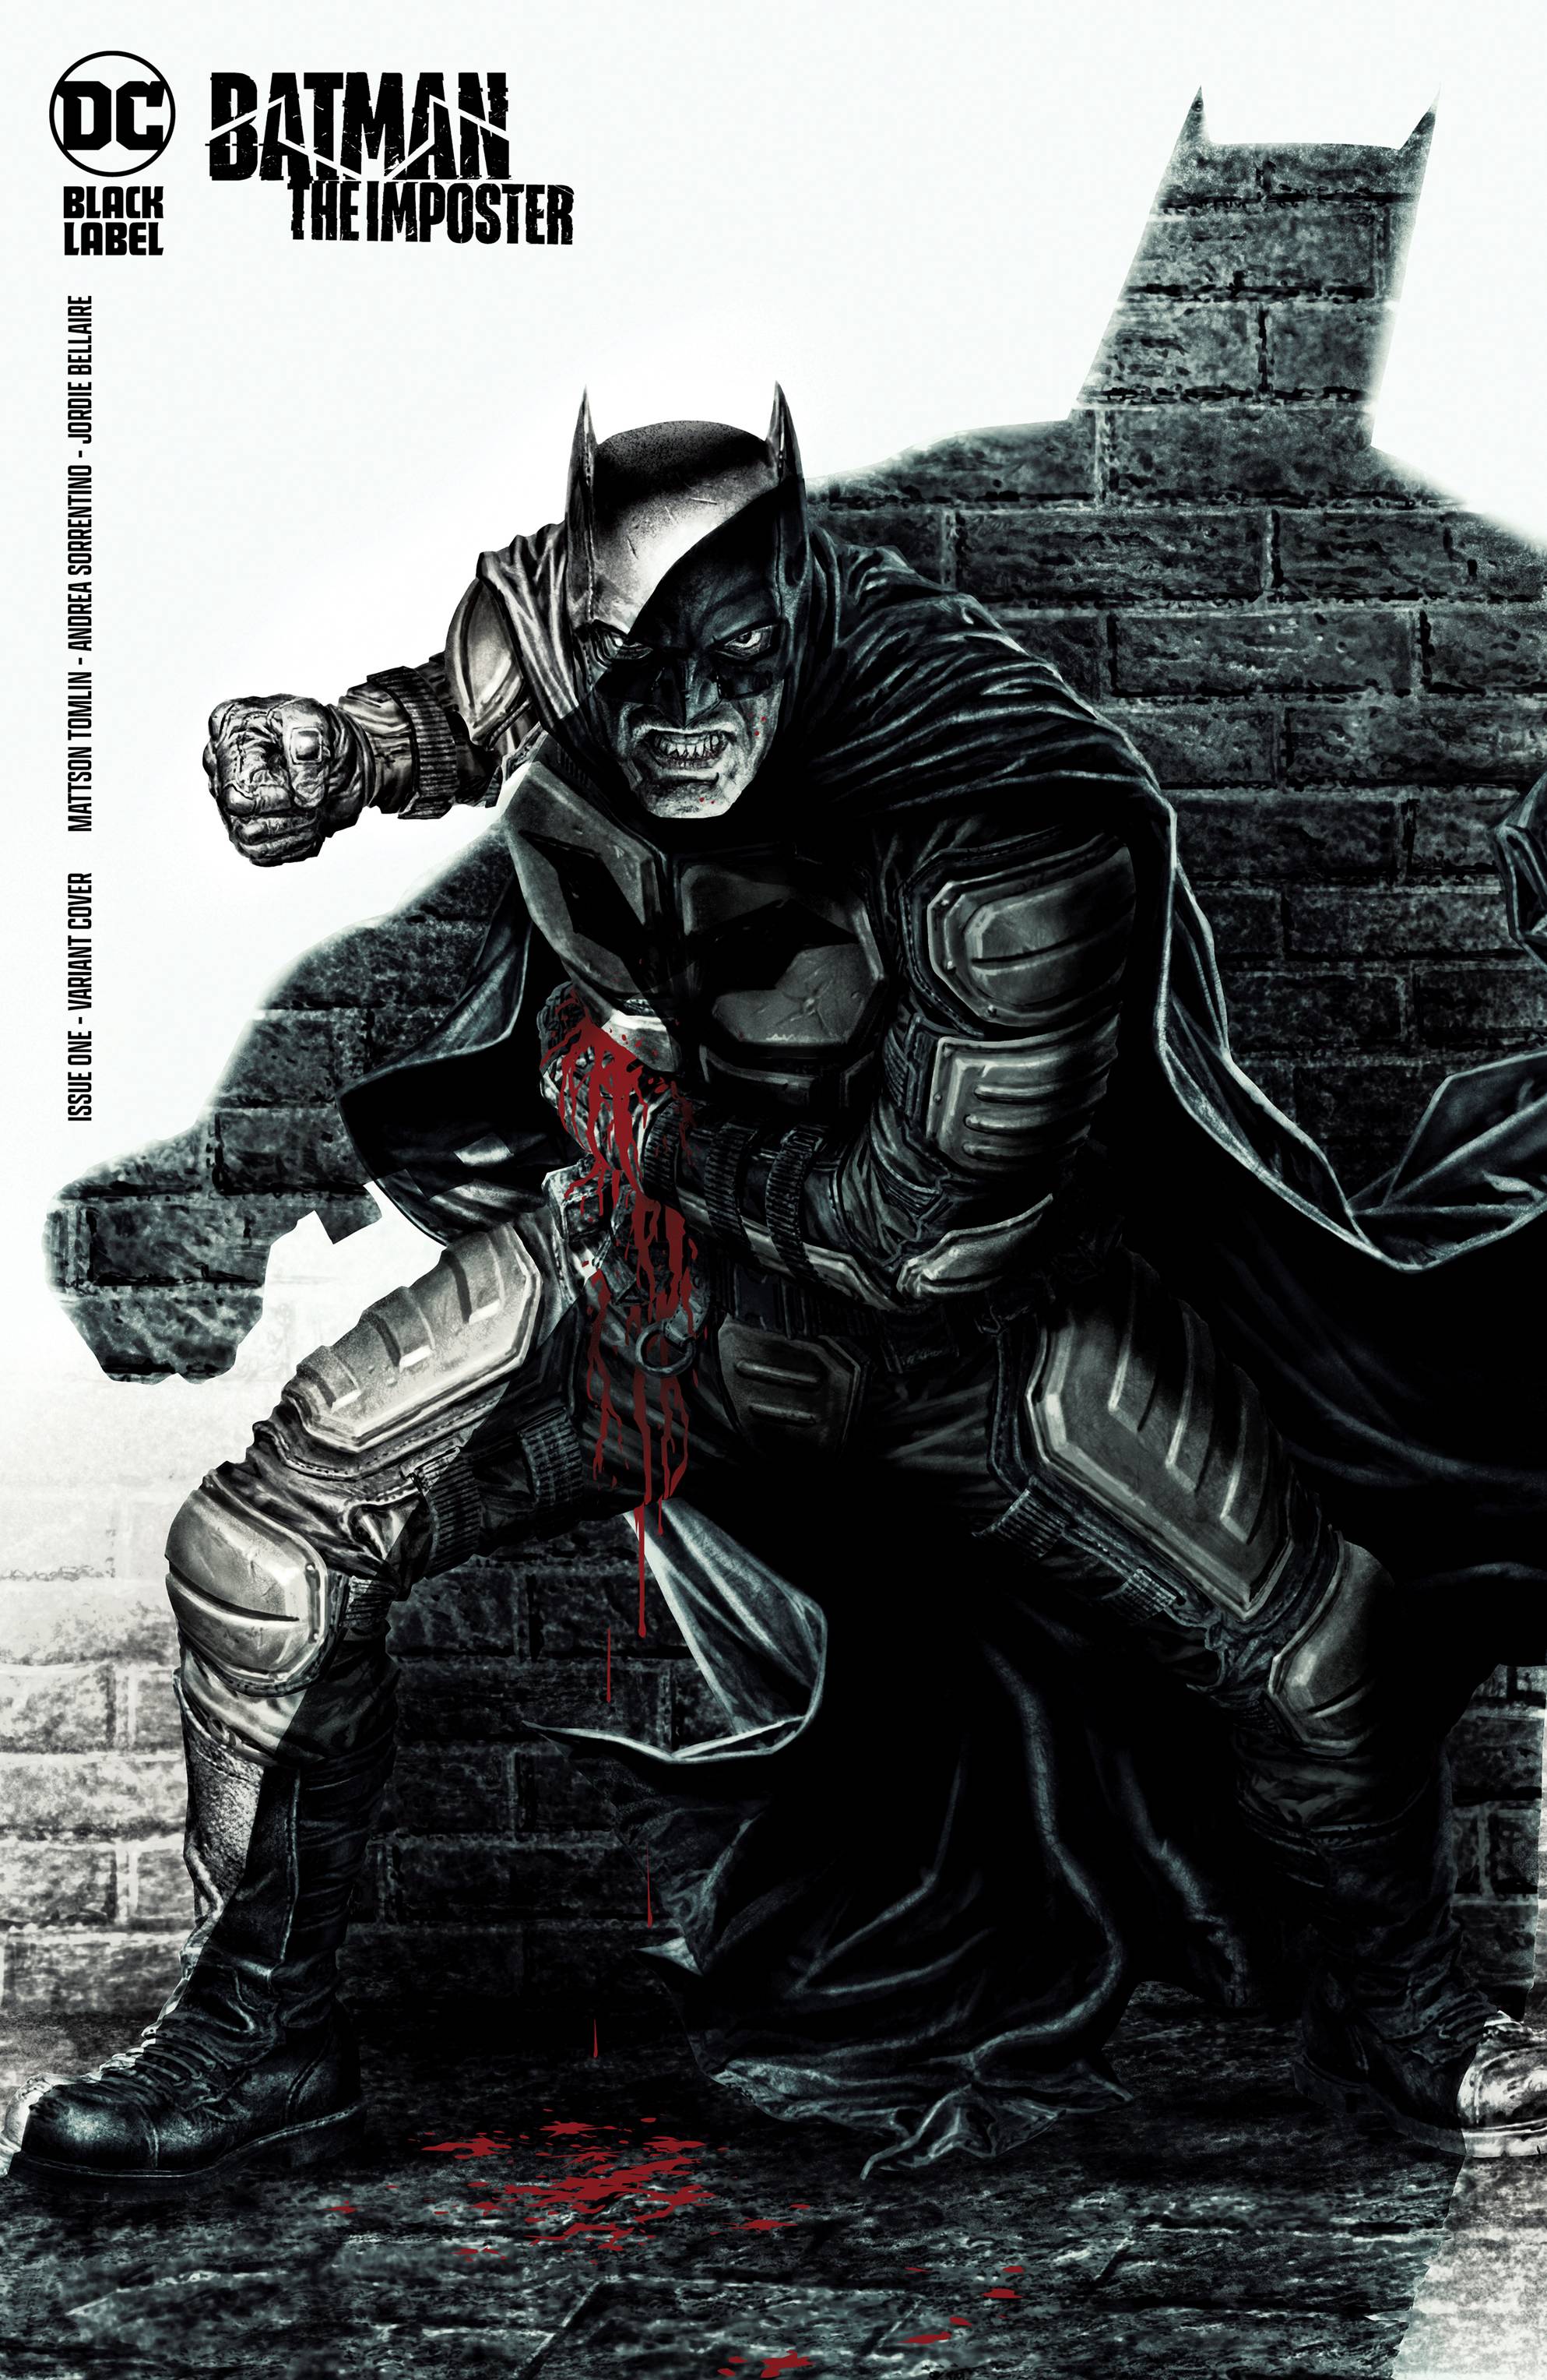 AUG217001 - BATMAN THE IMPOSTER #1 (OF 3) CVR B LEE BERMEJO (MR) - Previews  World